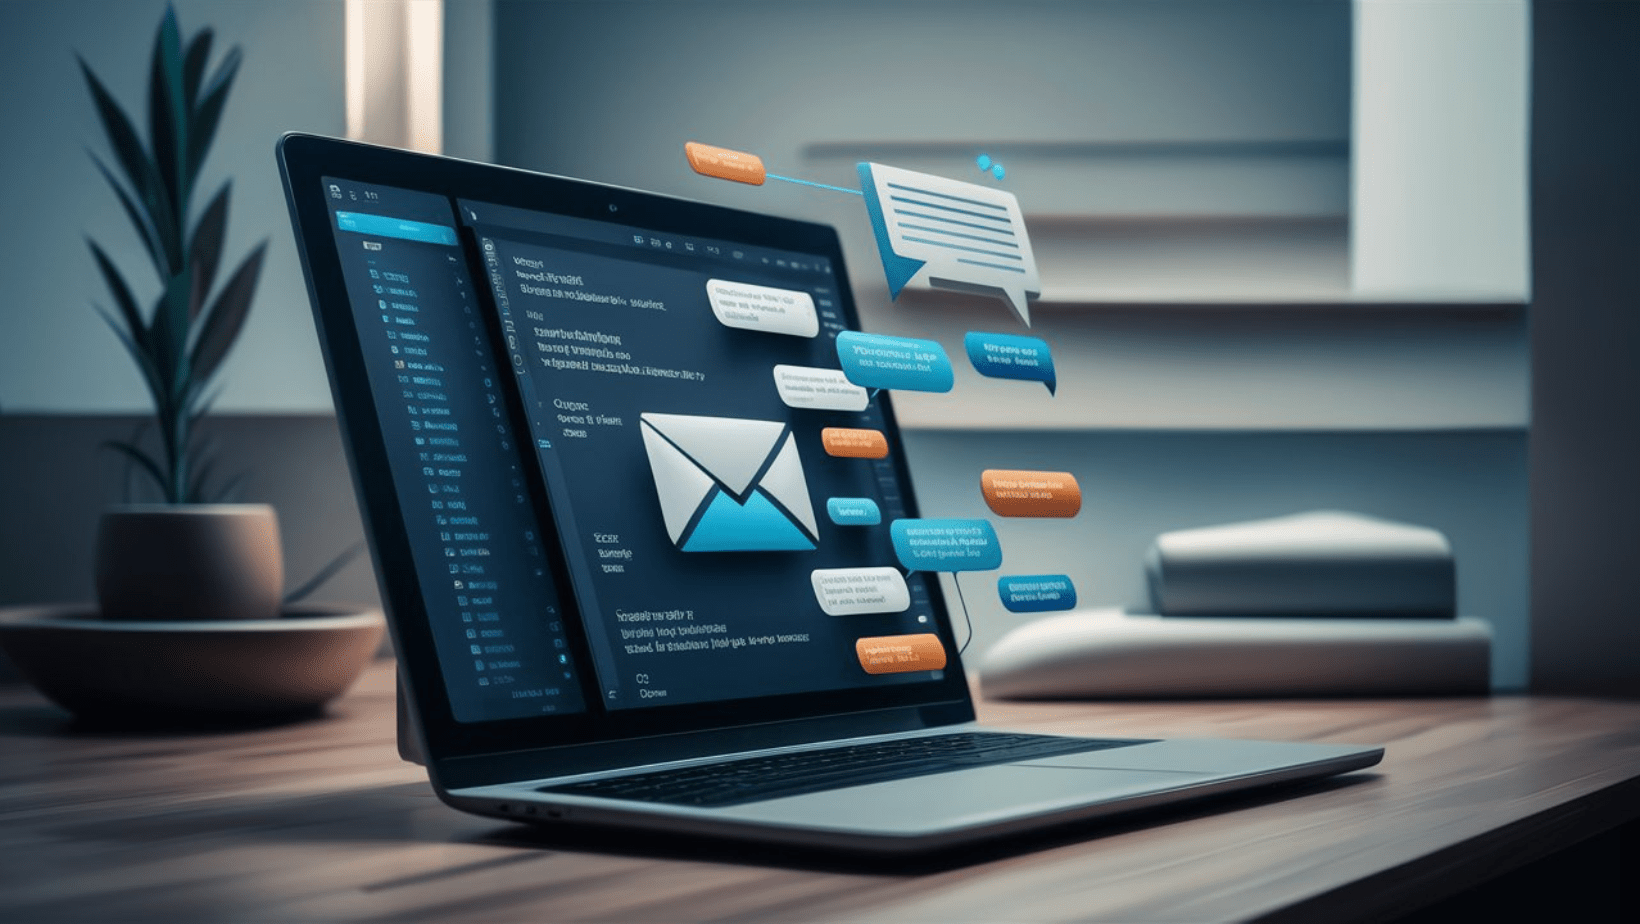 Email Integration